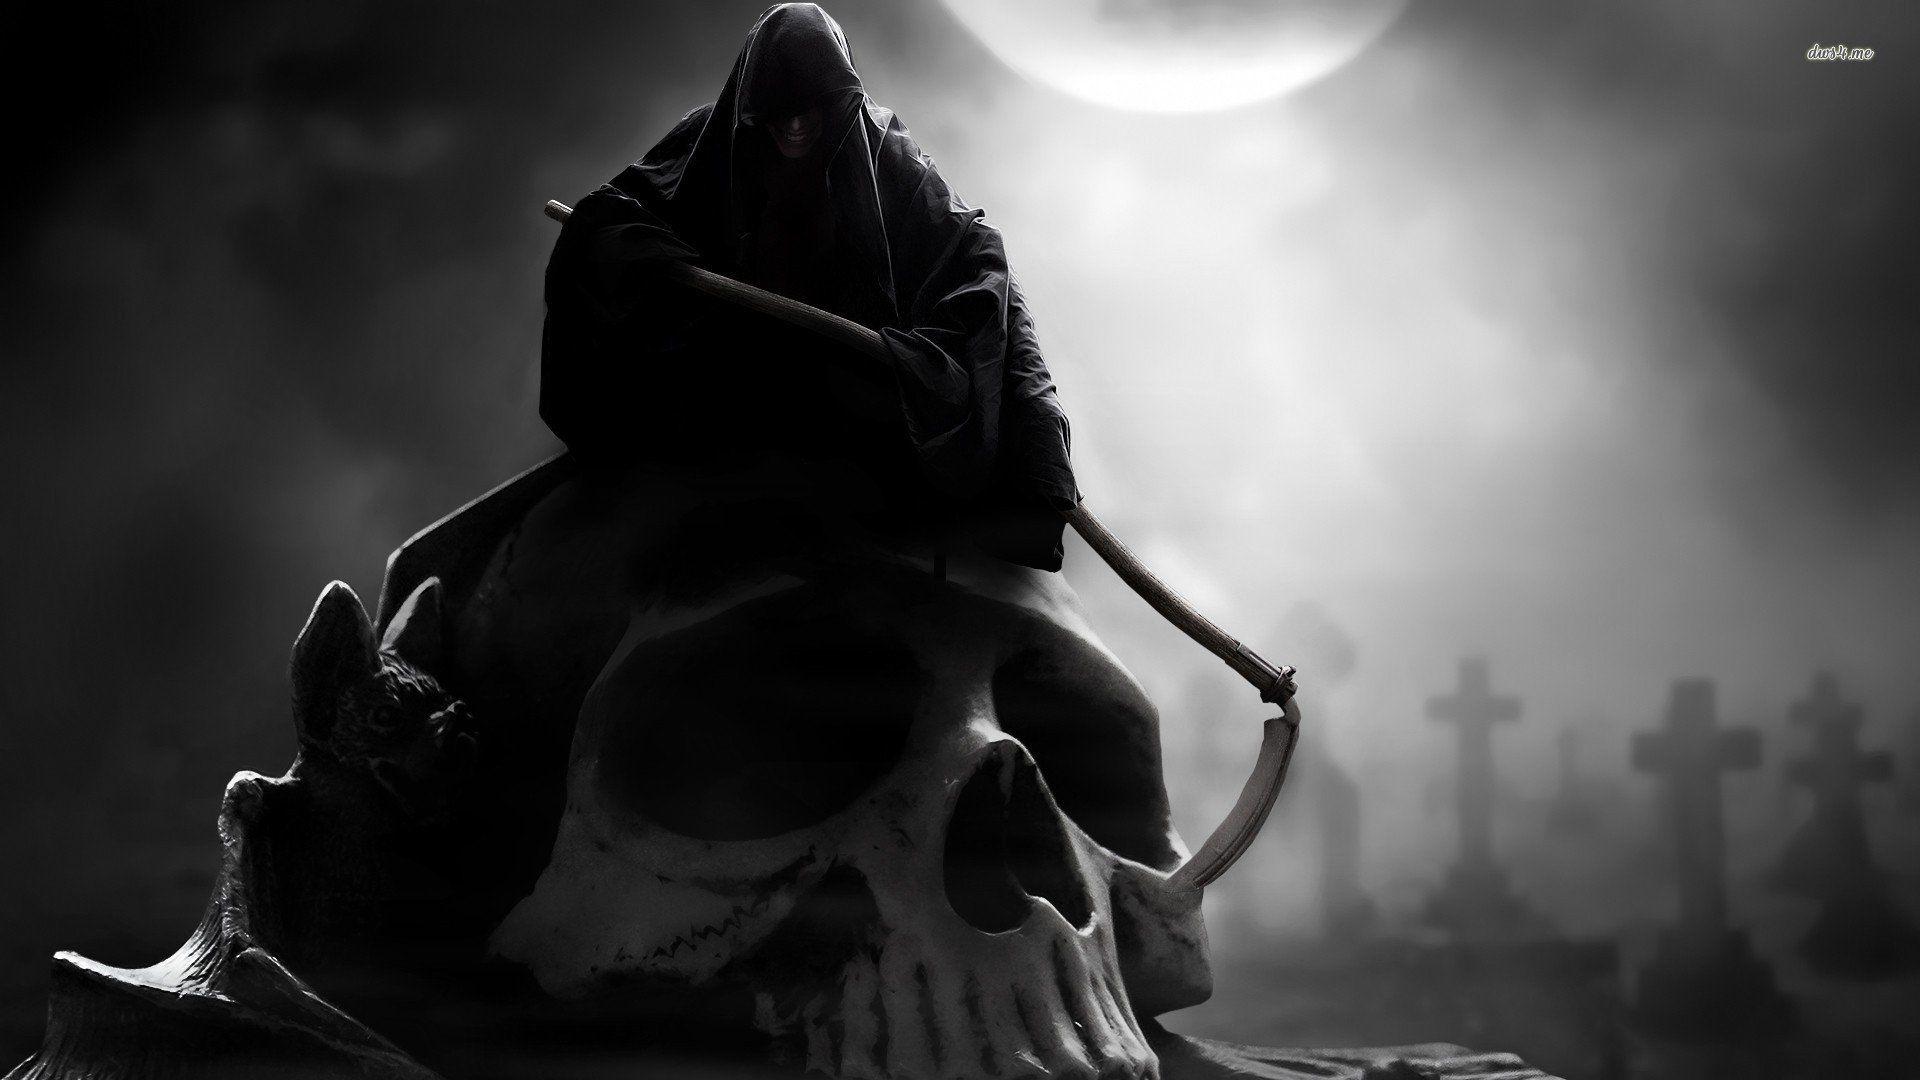 Free Grim Reaper On Horse Wallpaper 1080p